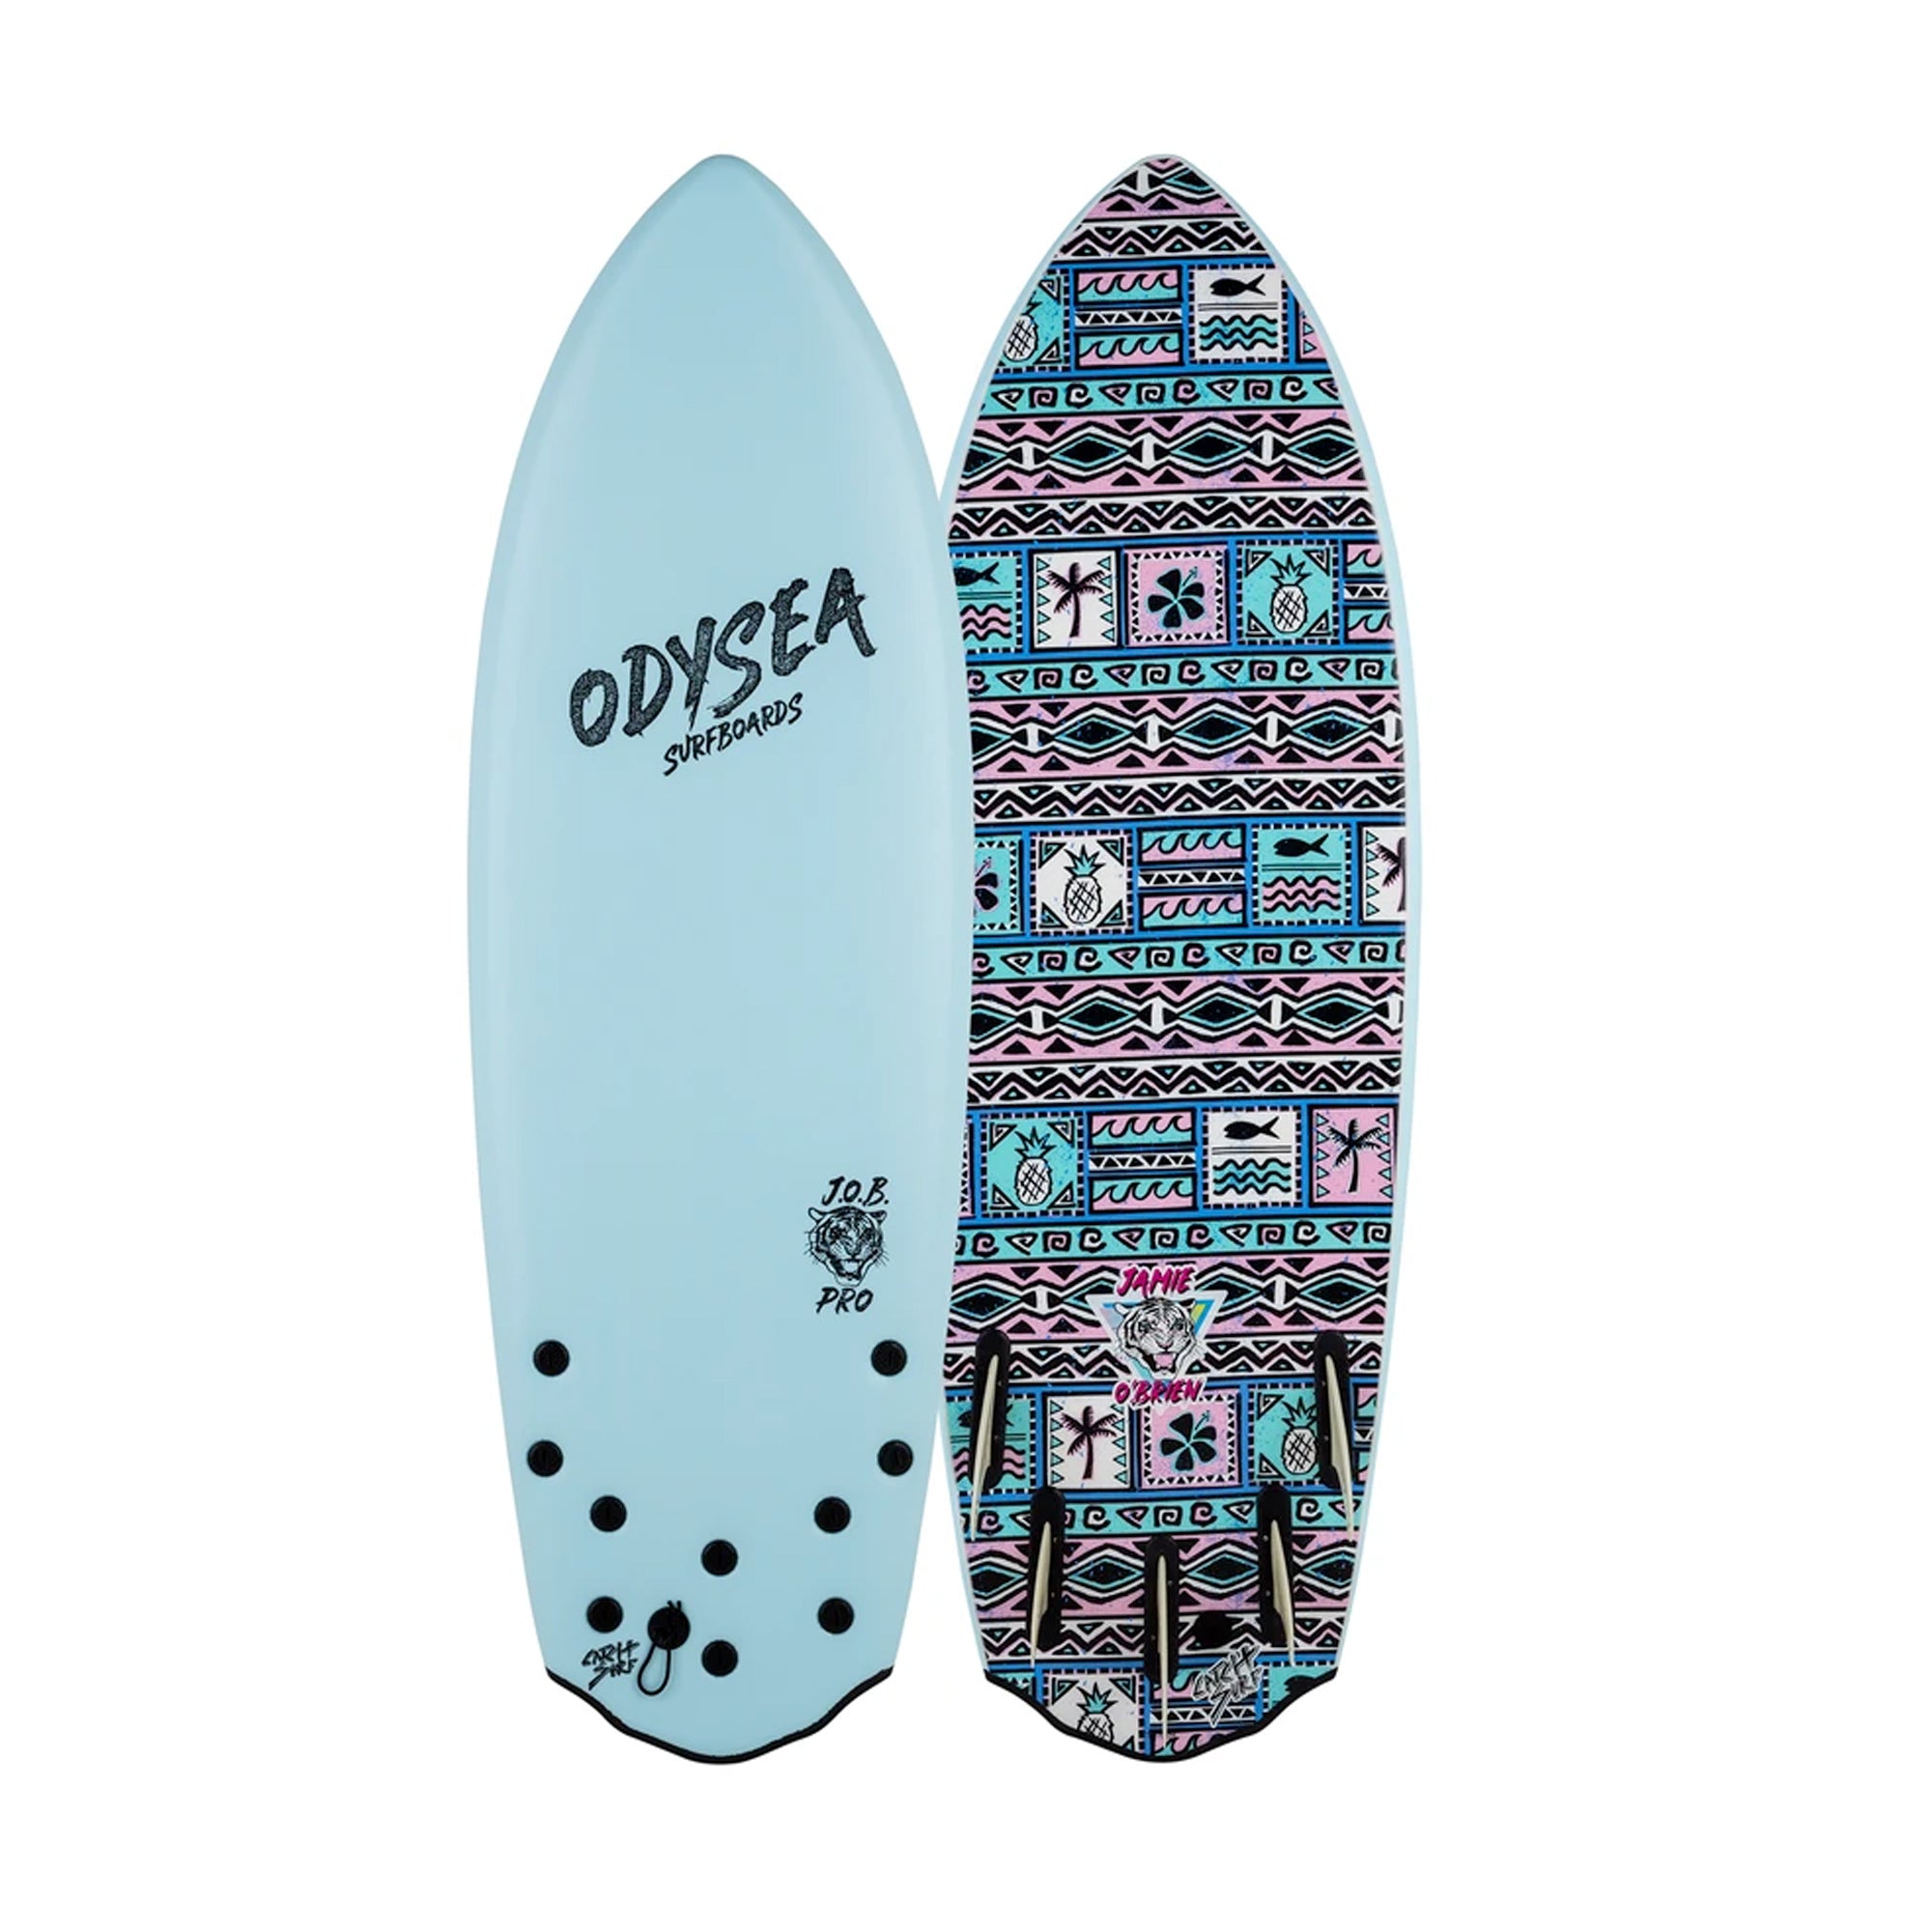 Catch Surf Odysea 5'2 Five Fin JOB Pro Soft Surfboard